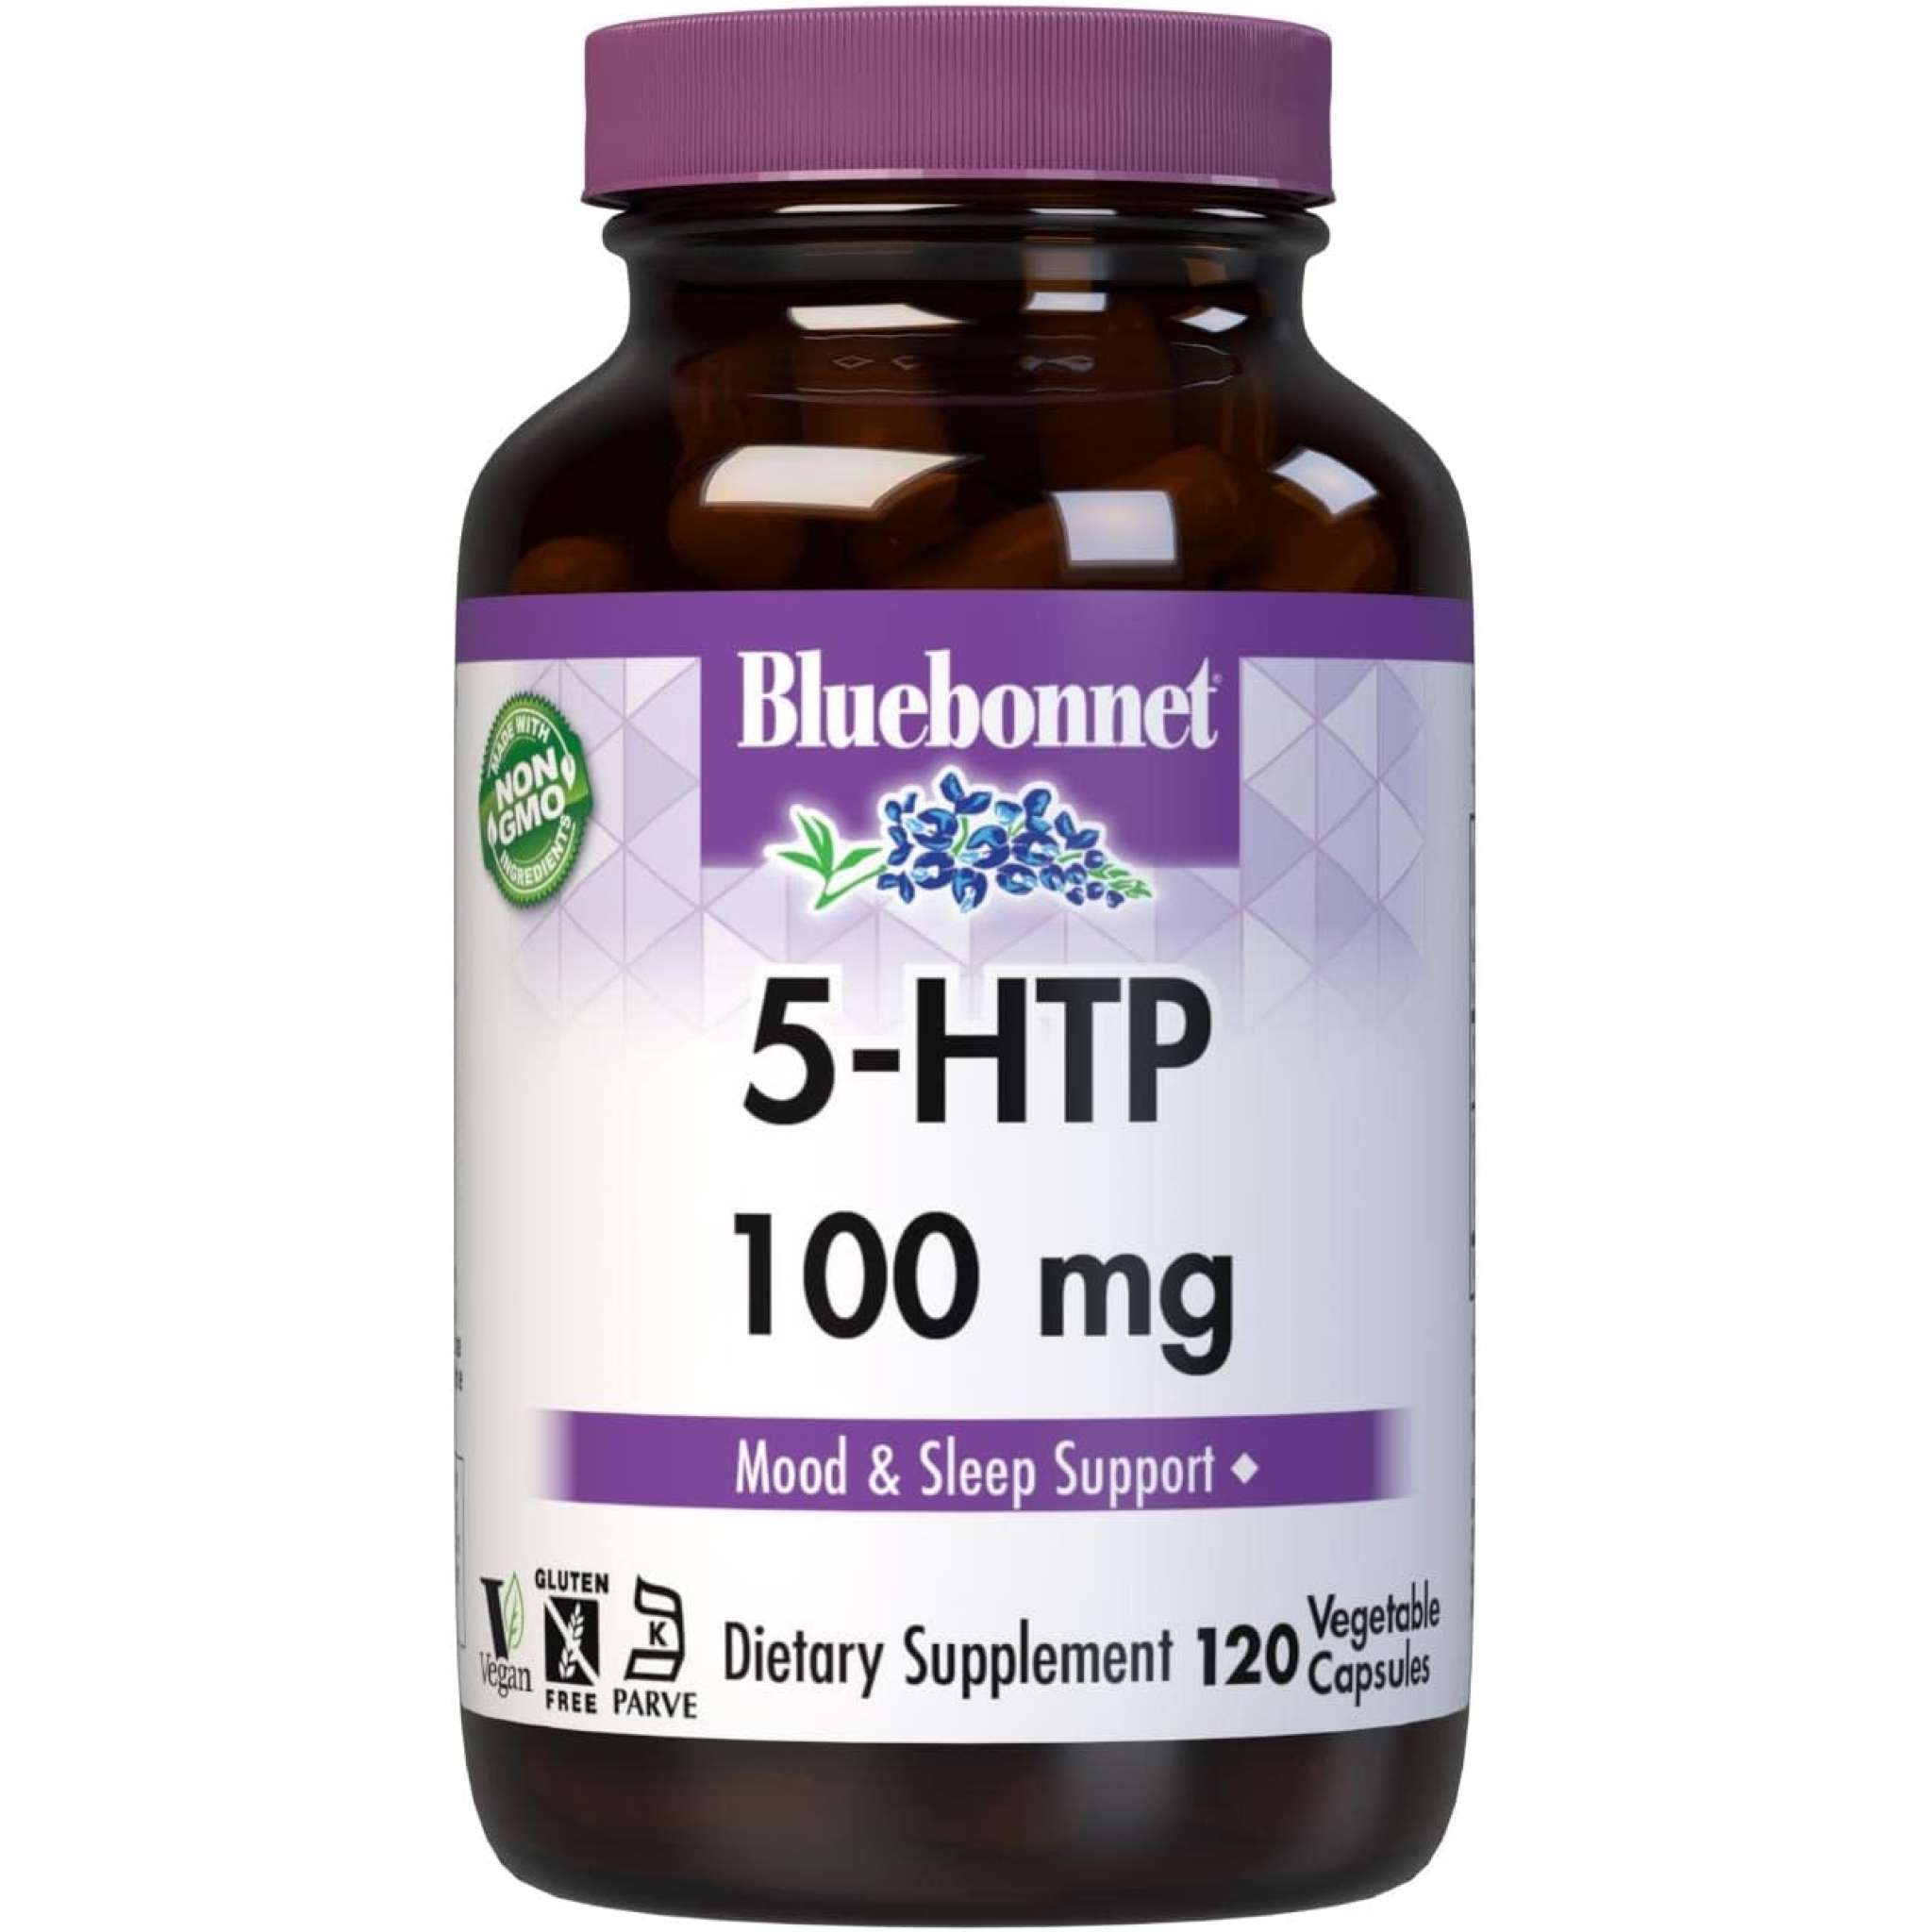 Bluebonnet - 5 HTP 100 mg vCap